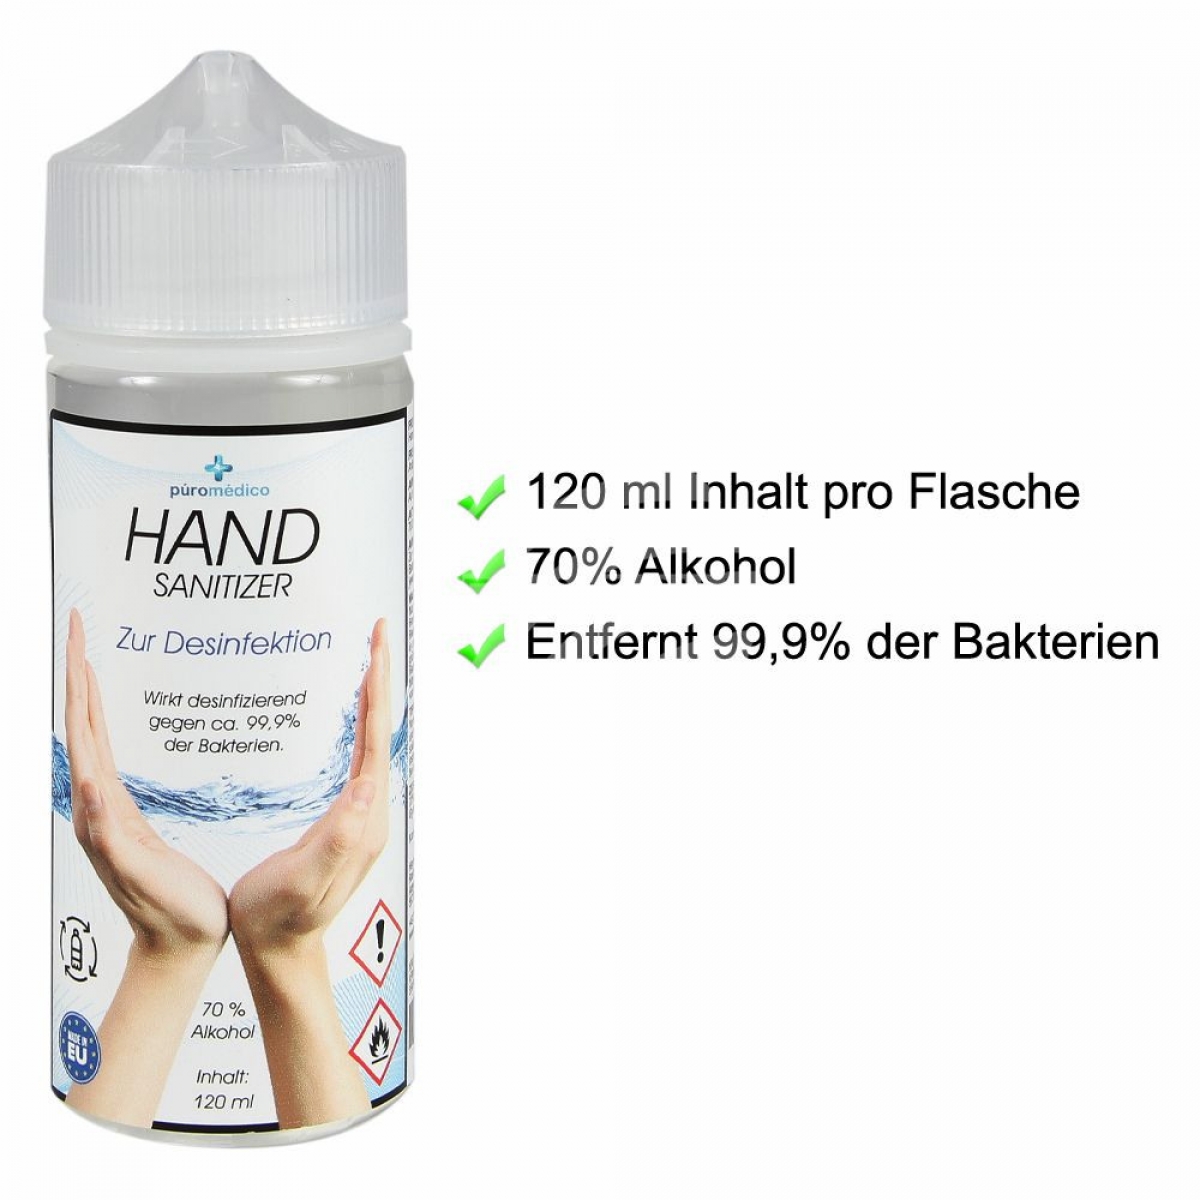 HAND-SANITIZER-Hygiene, Handdesinfektion - Hnde-Desinfektionsmittel, 120 ml